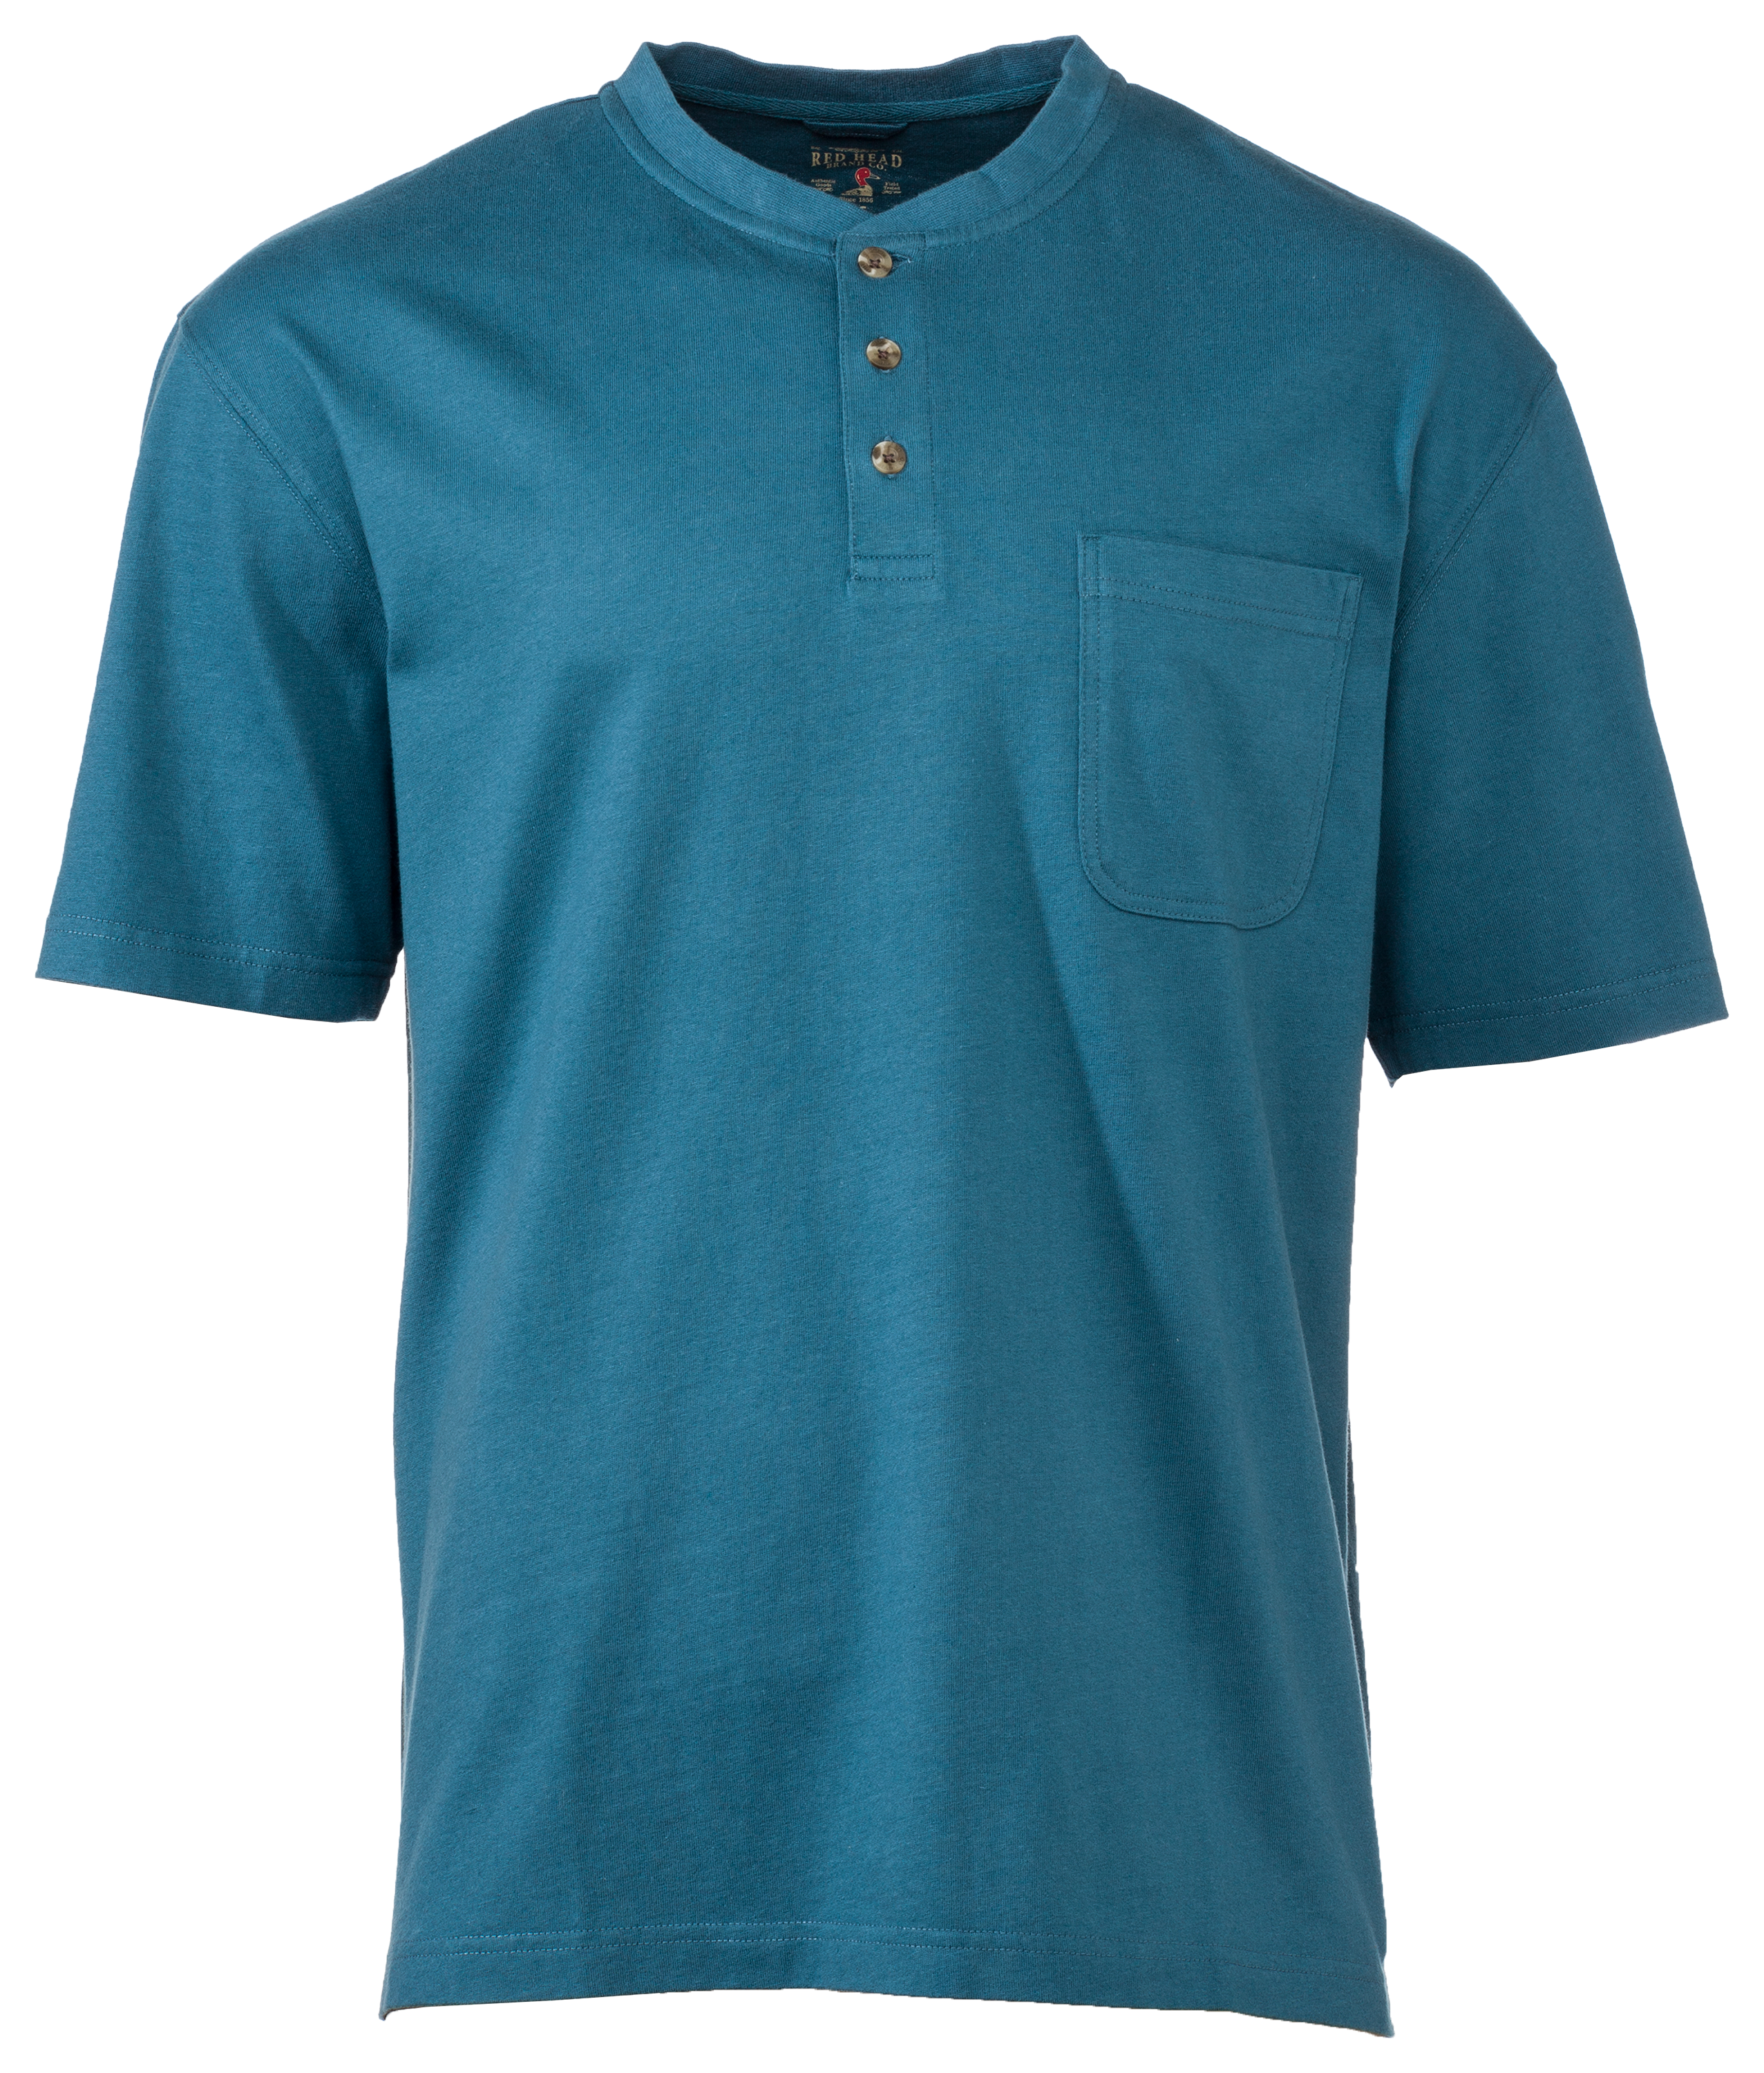 RedHead Henley Pocket Short-Sleeve Shirt for Men - Mallard - XL